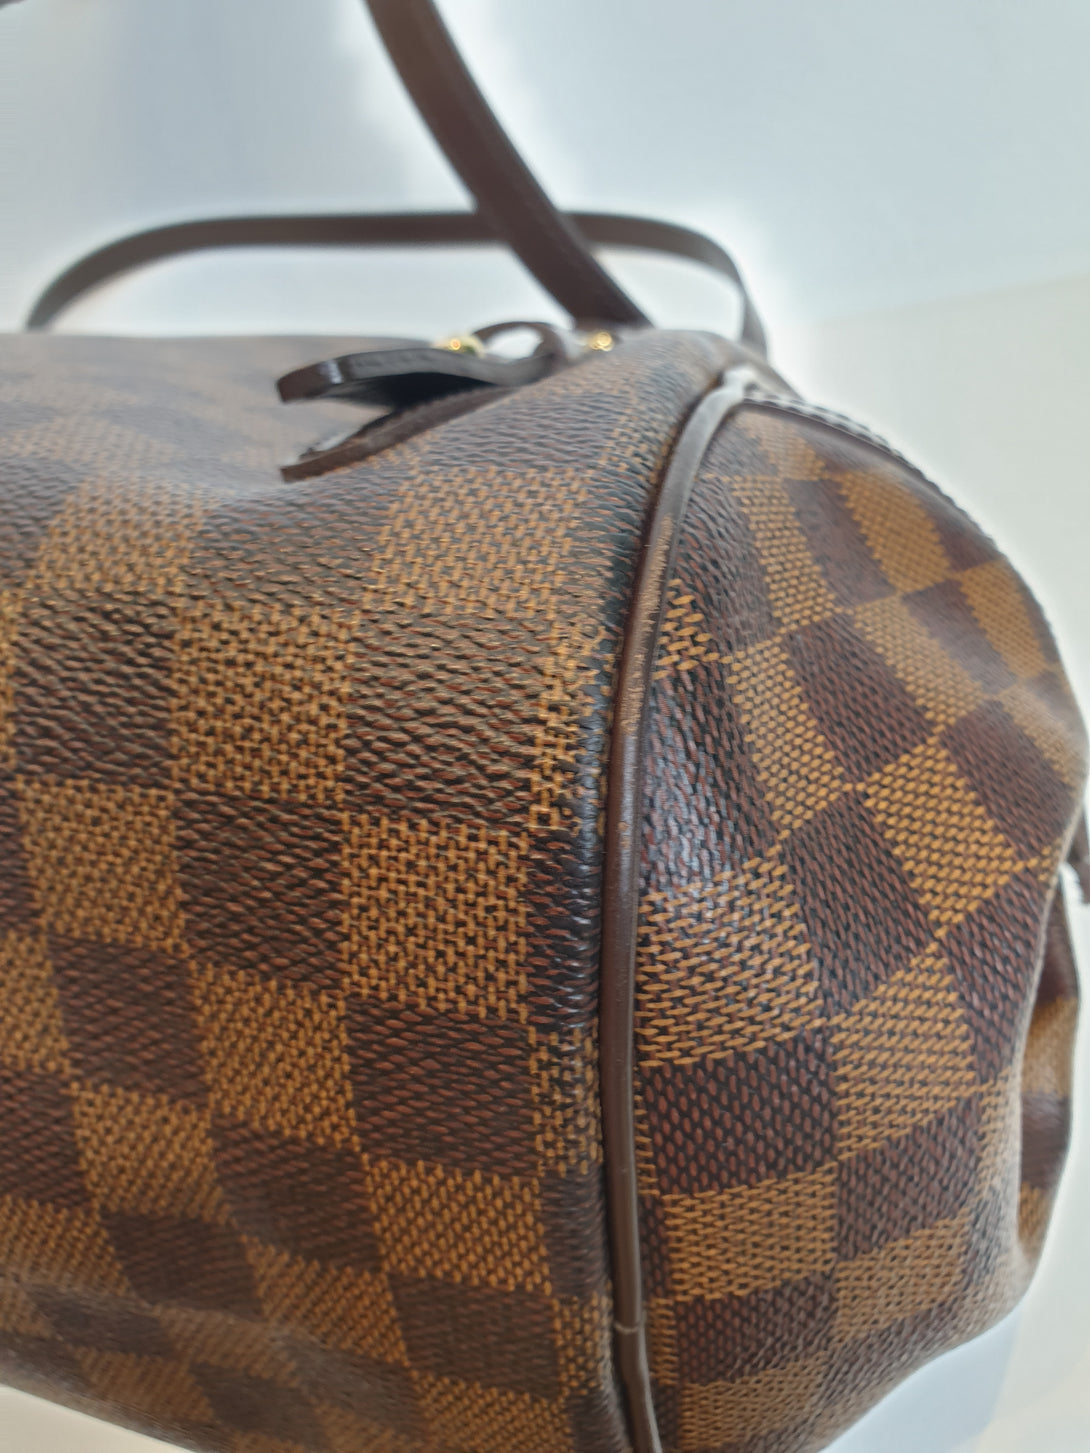 Louis Vuitton "Rivington GM" Damier Handbag - As Seen on Instagram 2/08/20 - Siopaella Designer Exchange